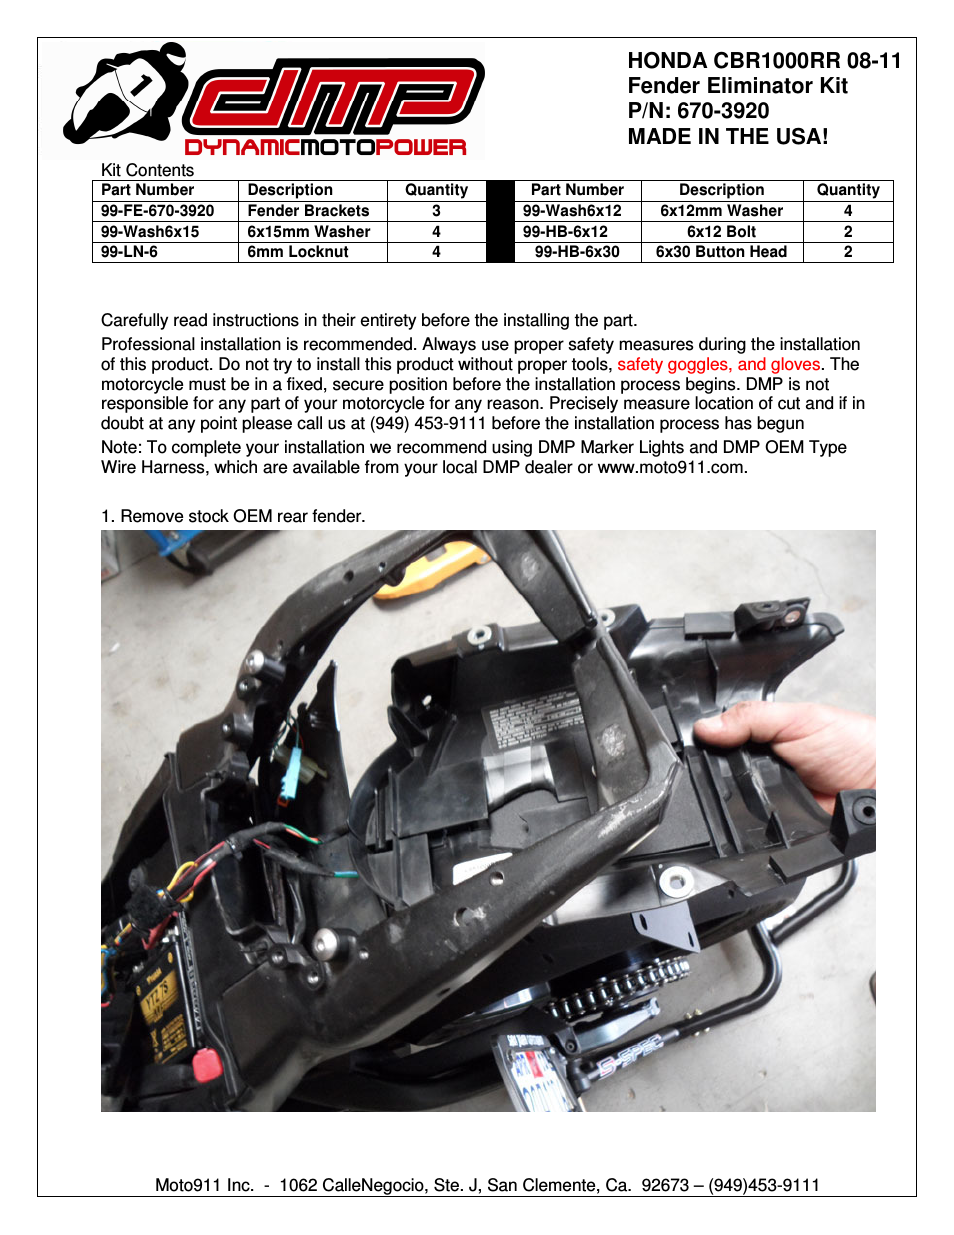 Honda CBR1000RR (08-11) DMP Fender Eliminator Instructions